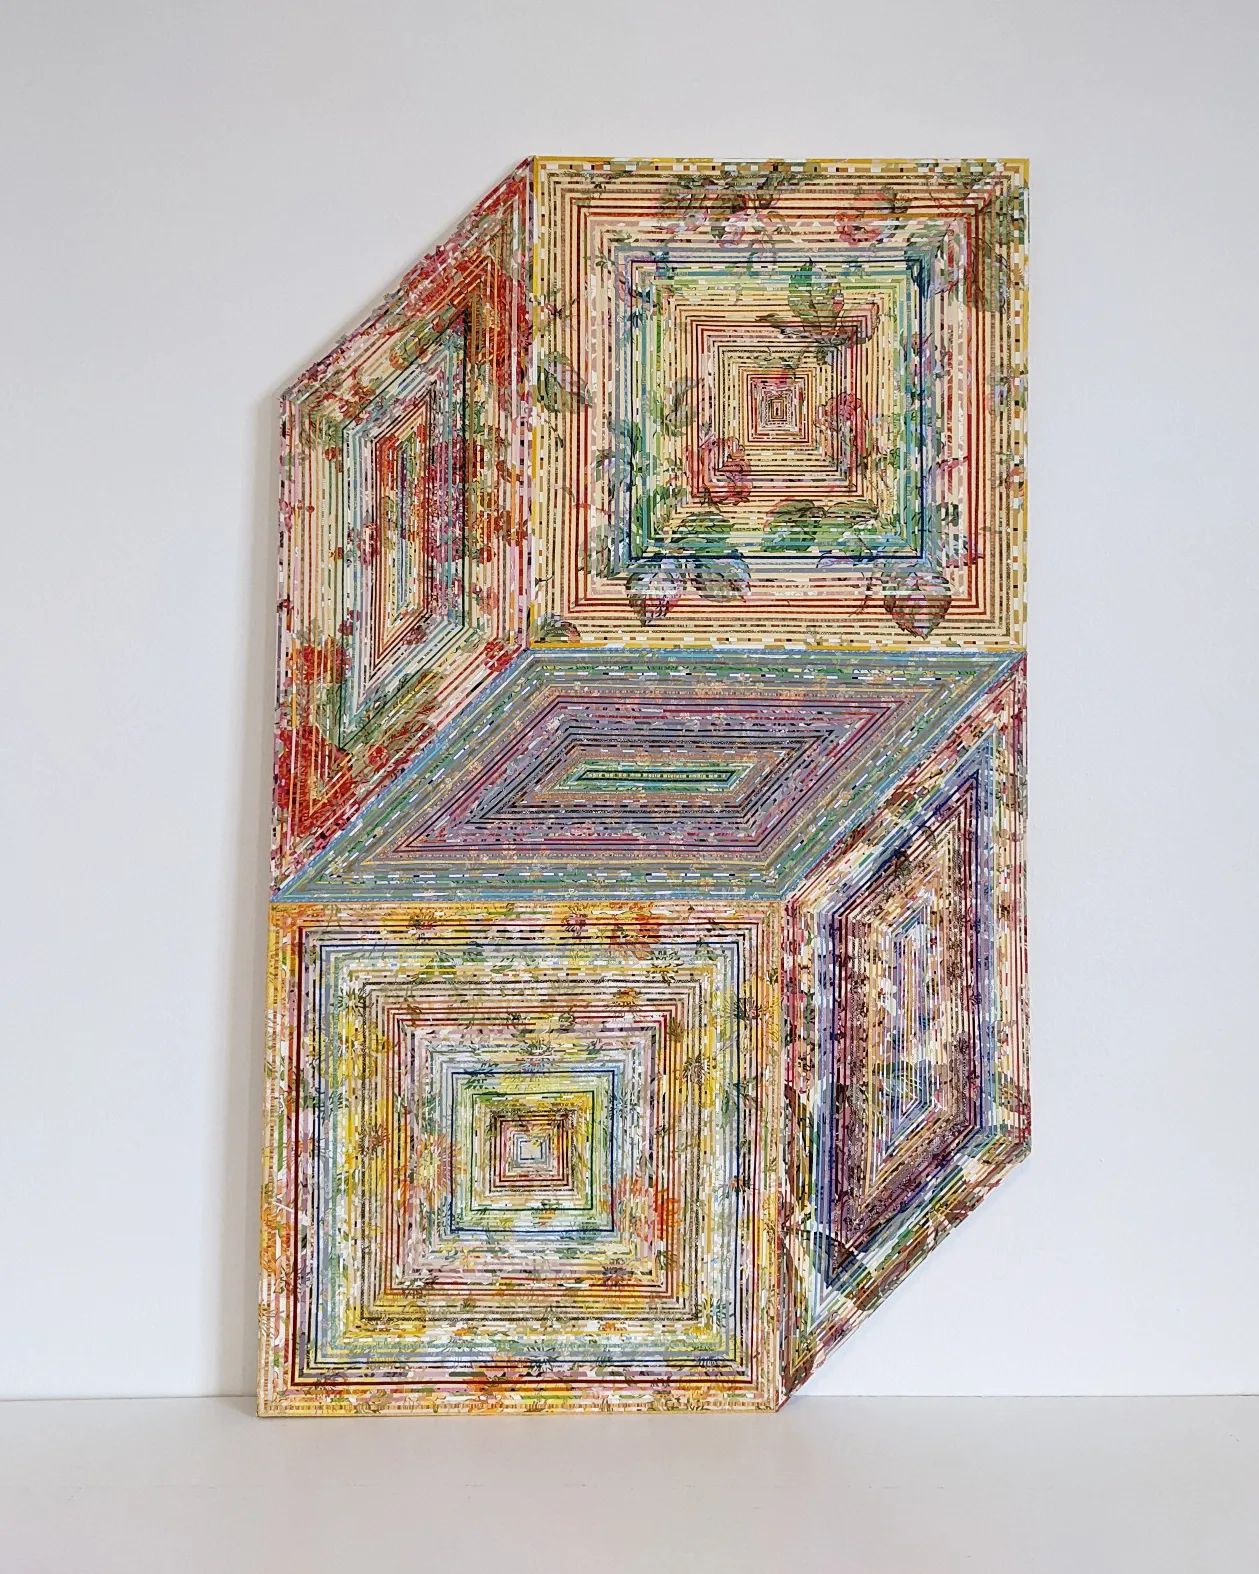 Amy Feigley Lee's Intricate Wallpaper Art (1)